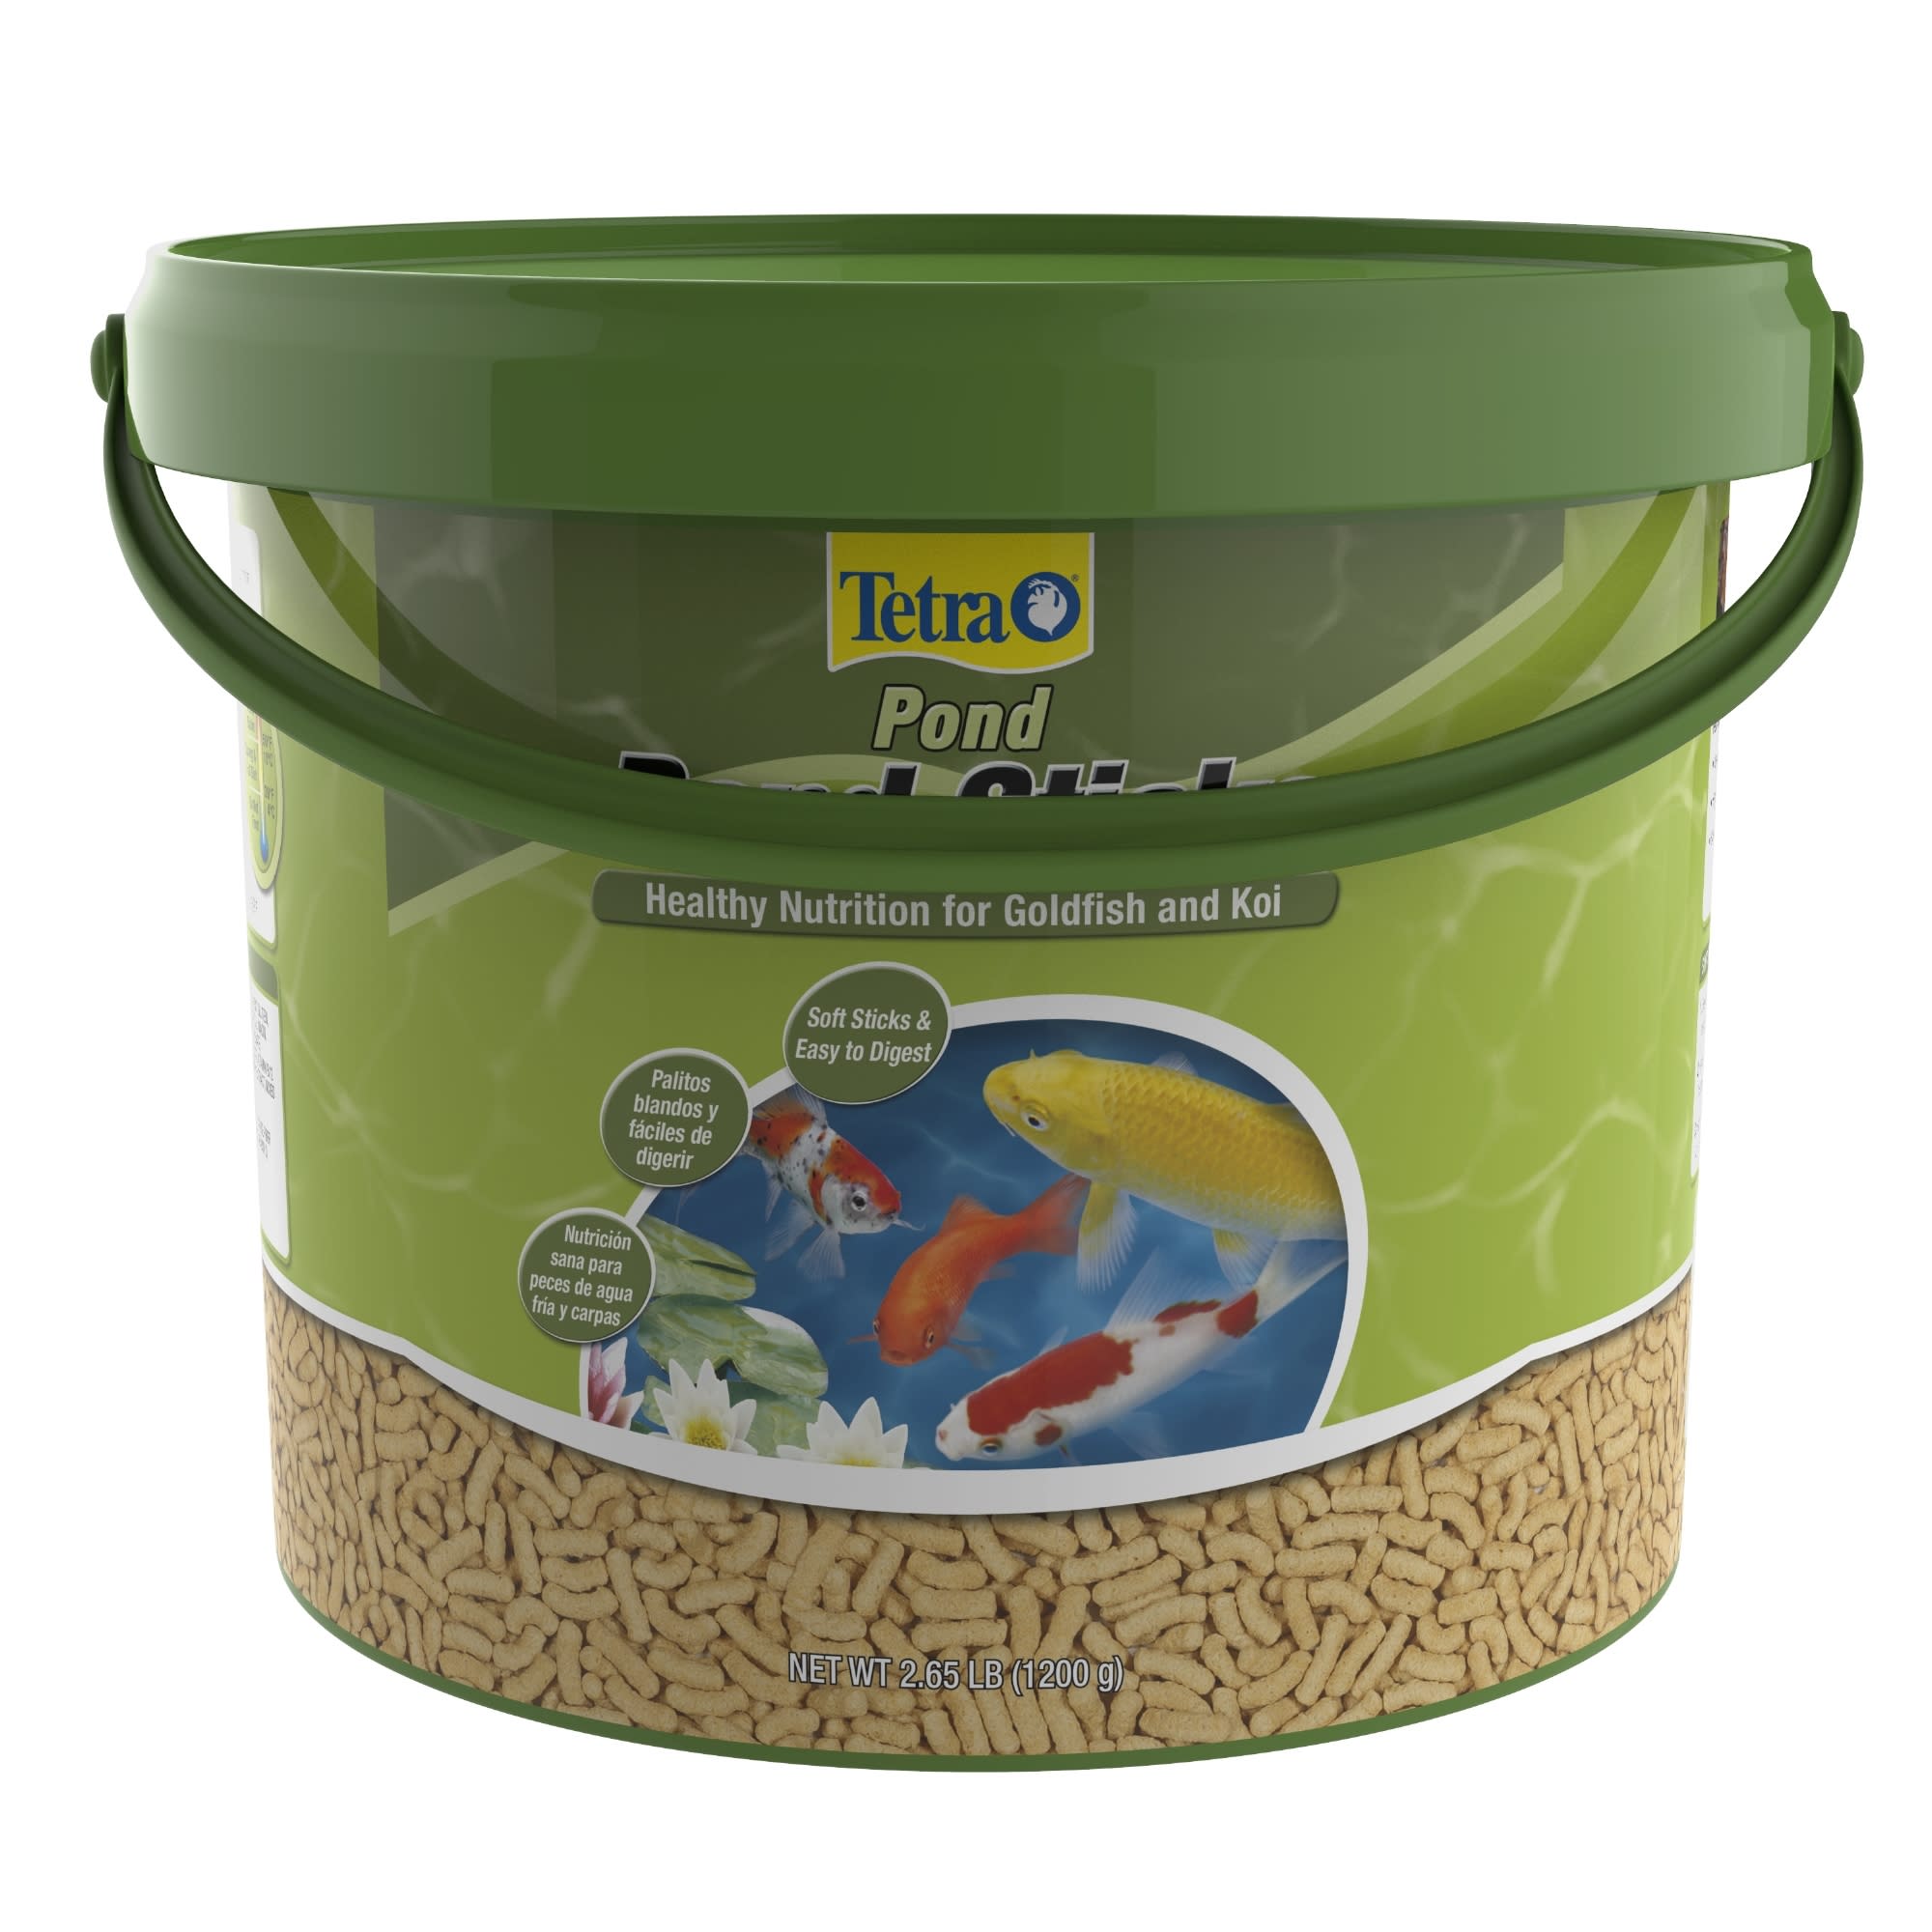 Tetra Pond Sticks 2.65 Pounds, Pond Fish Food, for Goldfish and Koi 